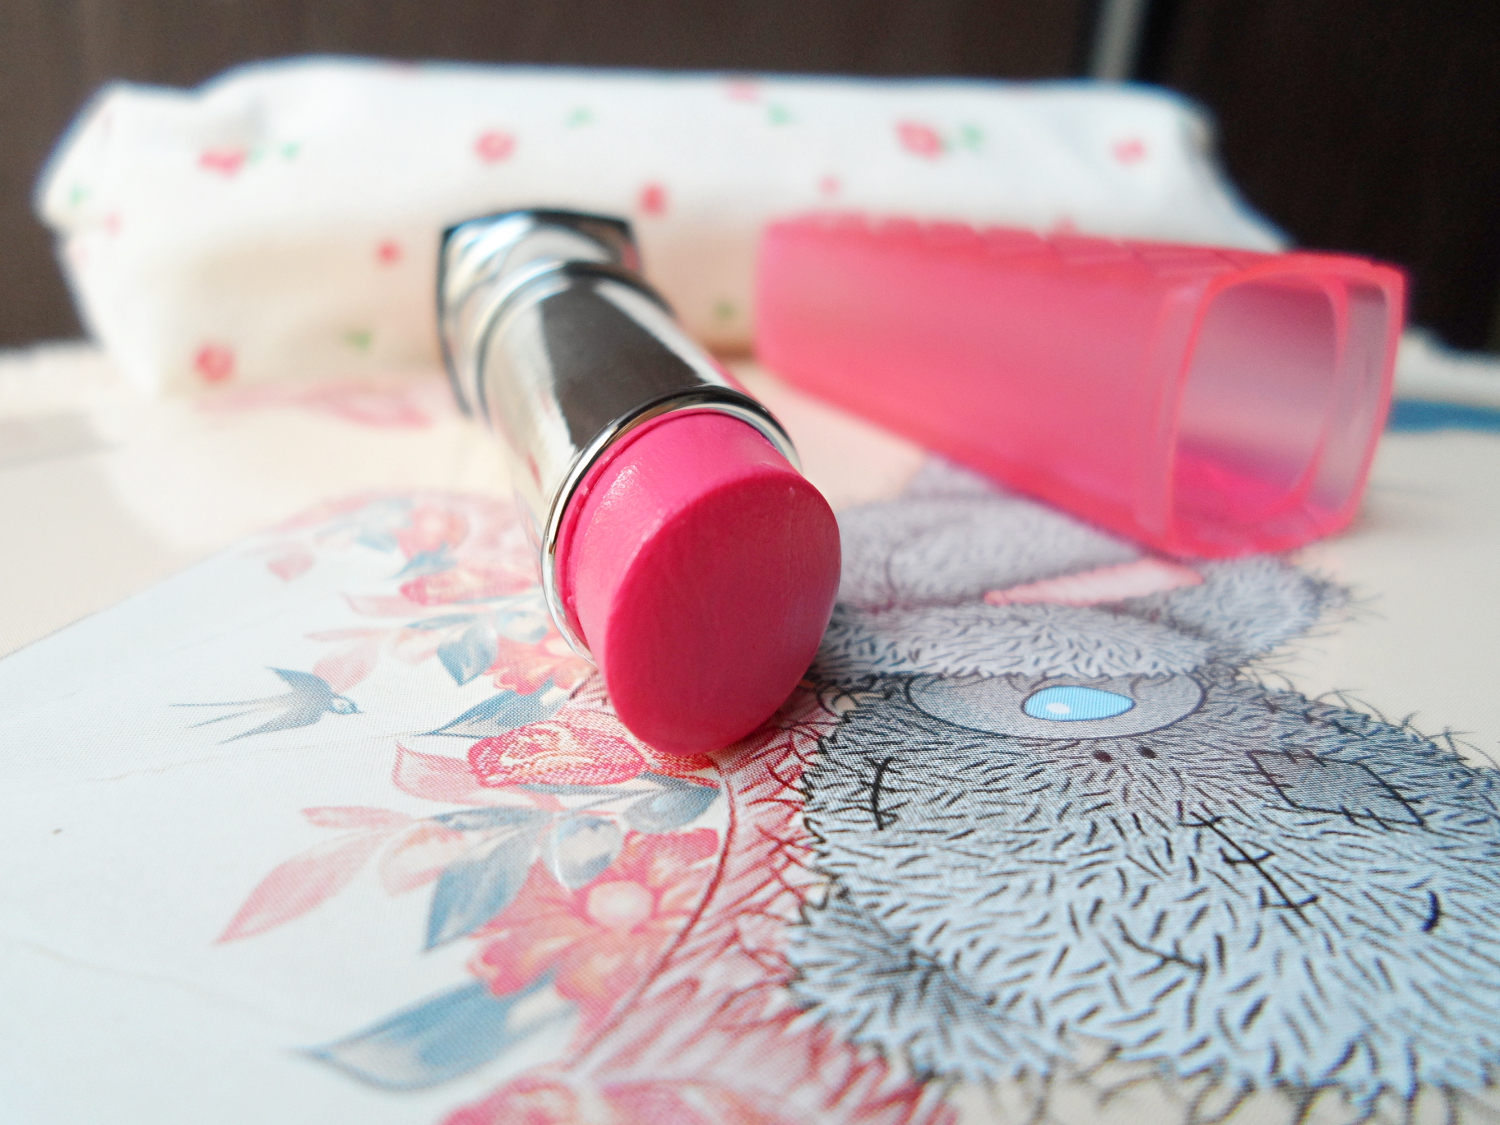 revlon cosmetics review pink bright lipstick swatches, помада ревлон отзывы и свотчи бьюти блог